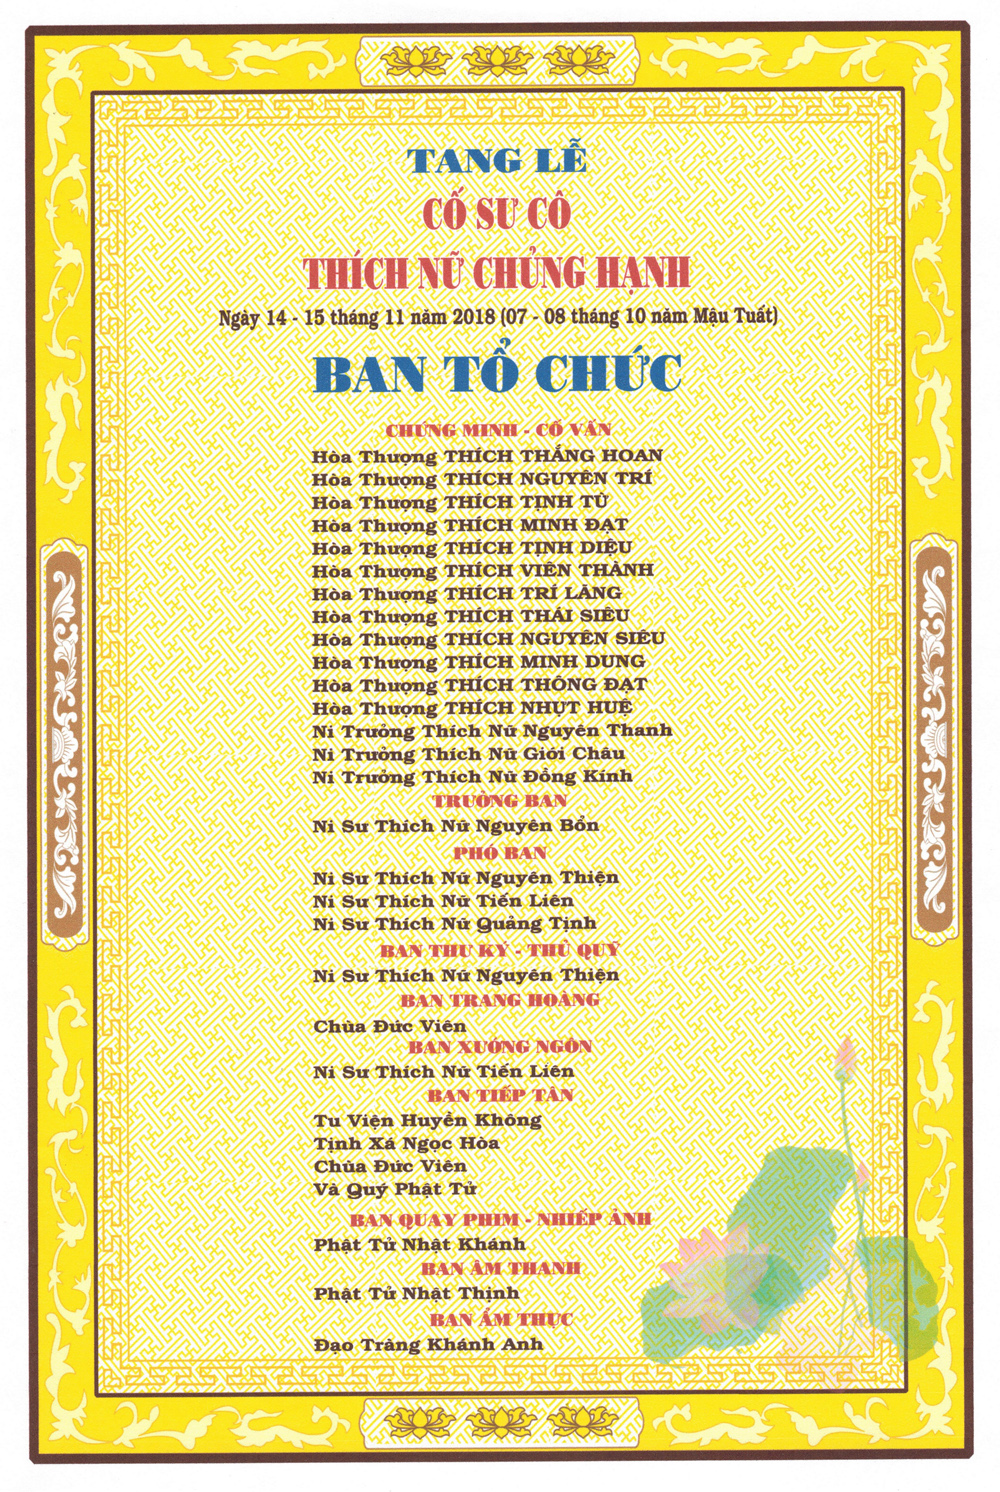 ban tang le-su co chung hanh (2)